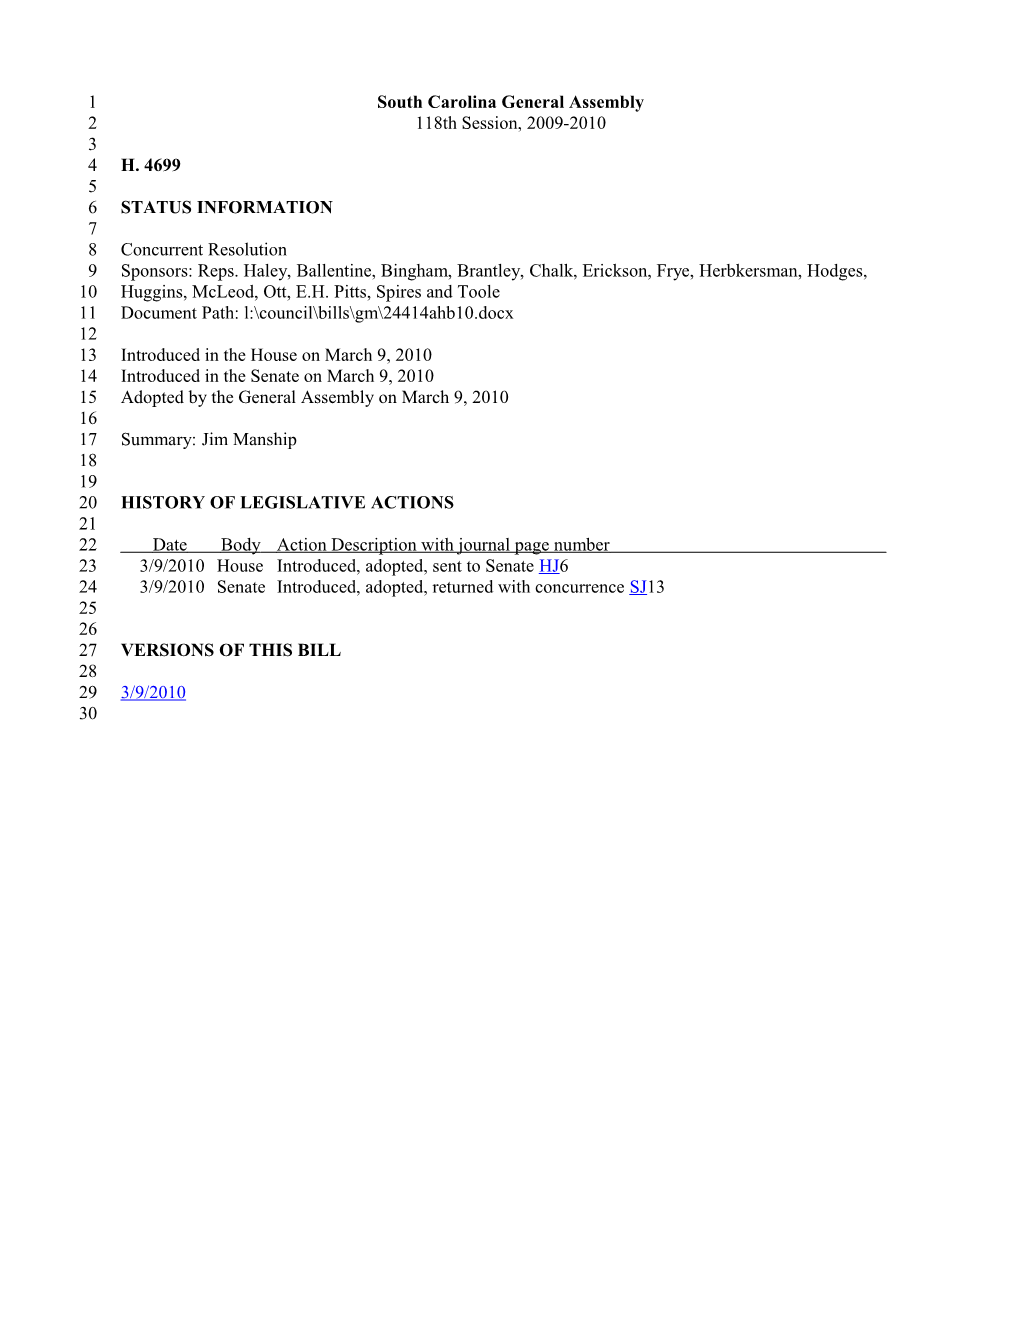 2009-2010 Bill 4699: Jim Manship - South Carolina Legislature Online